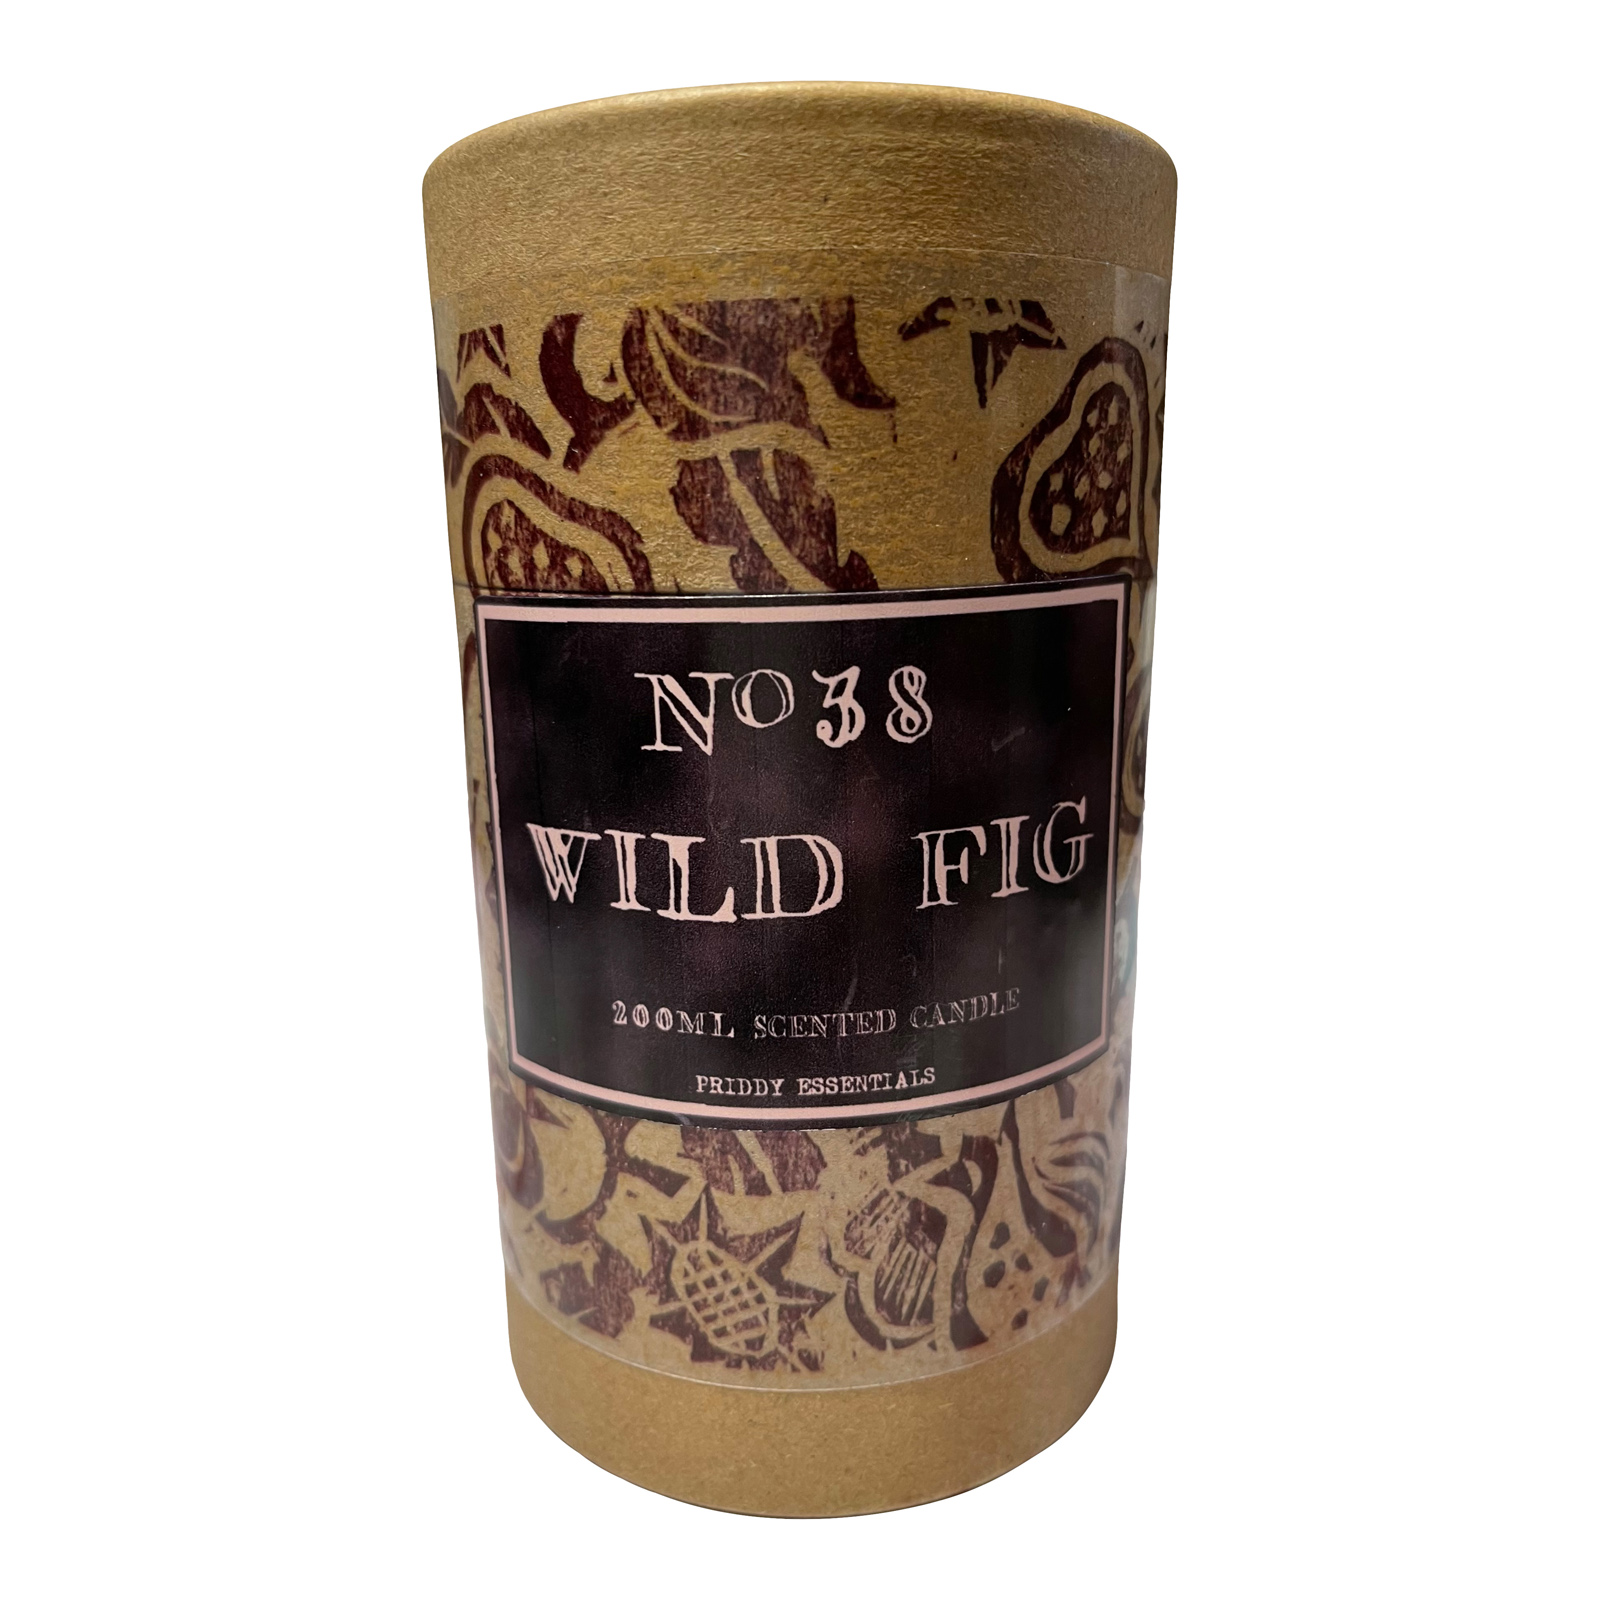 Priddy Essentials Wild Fig Candle